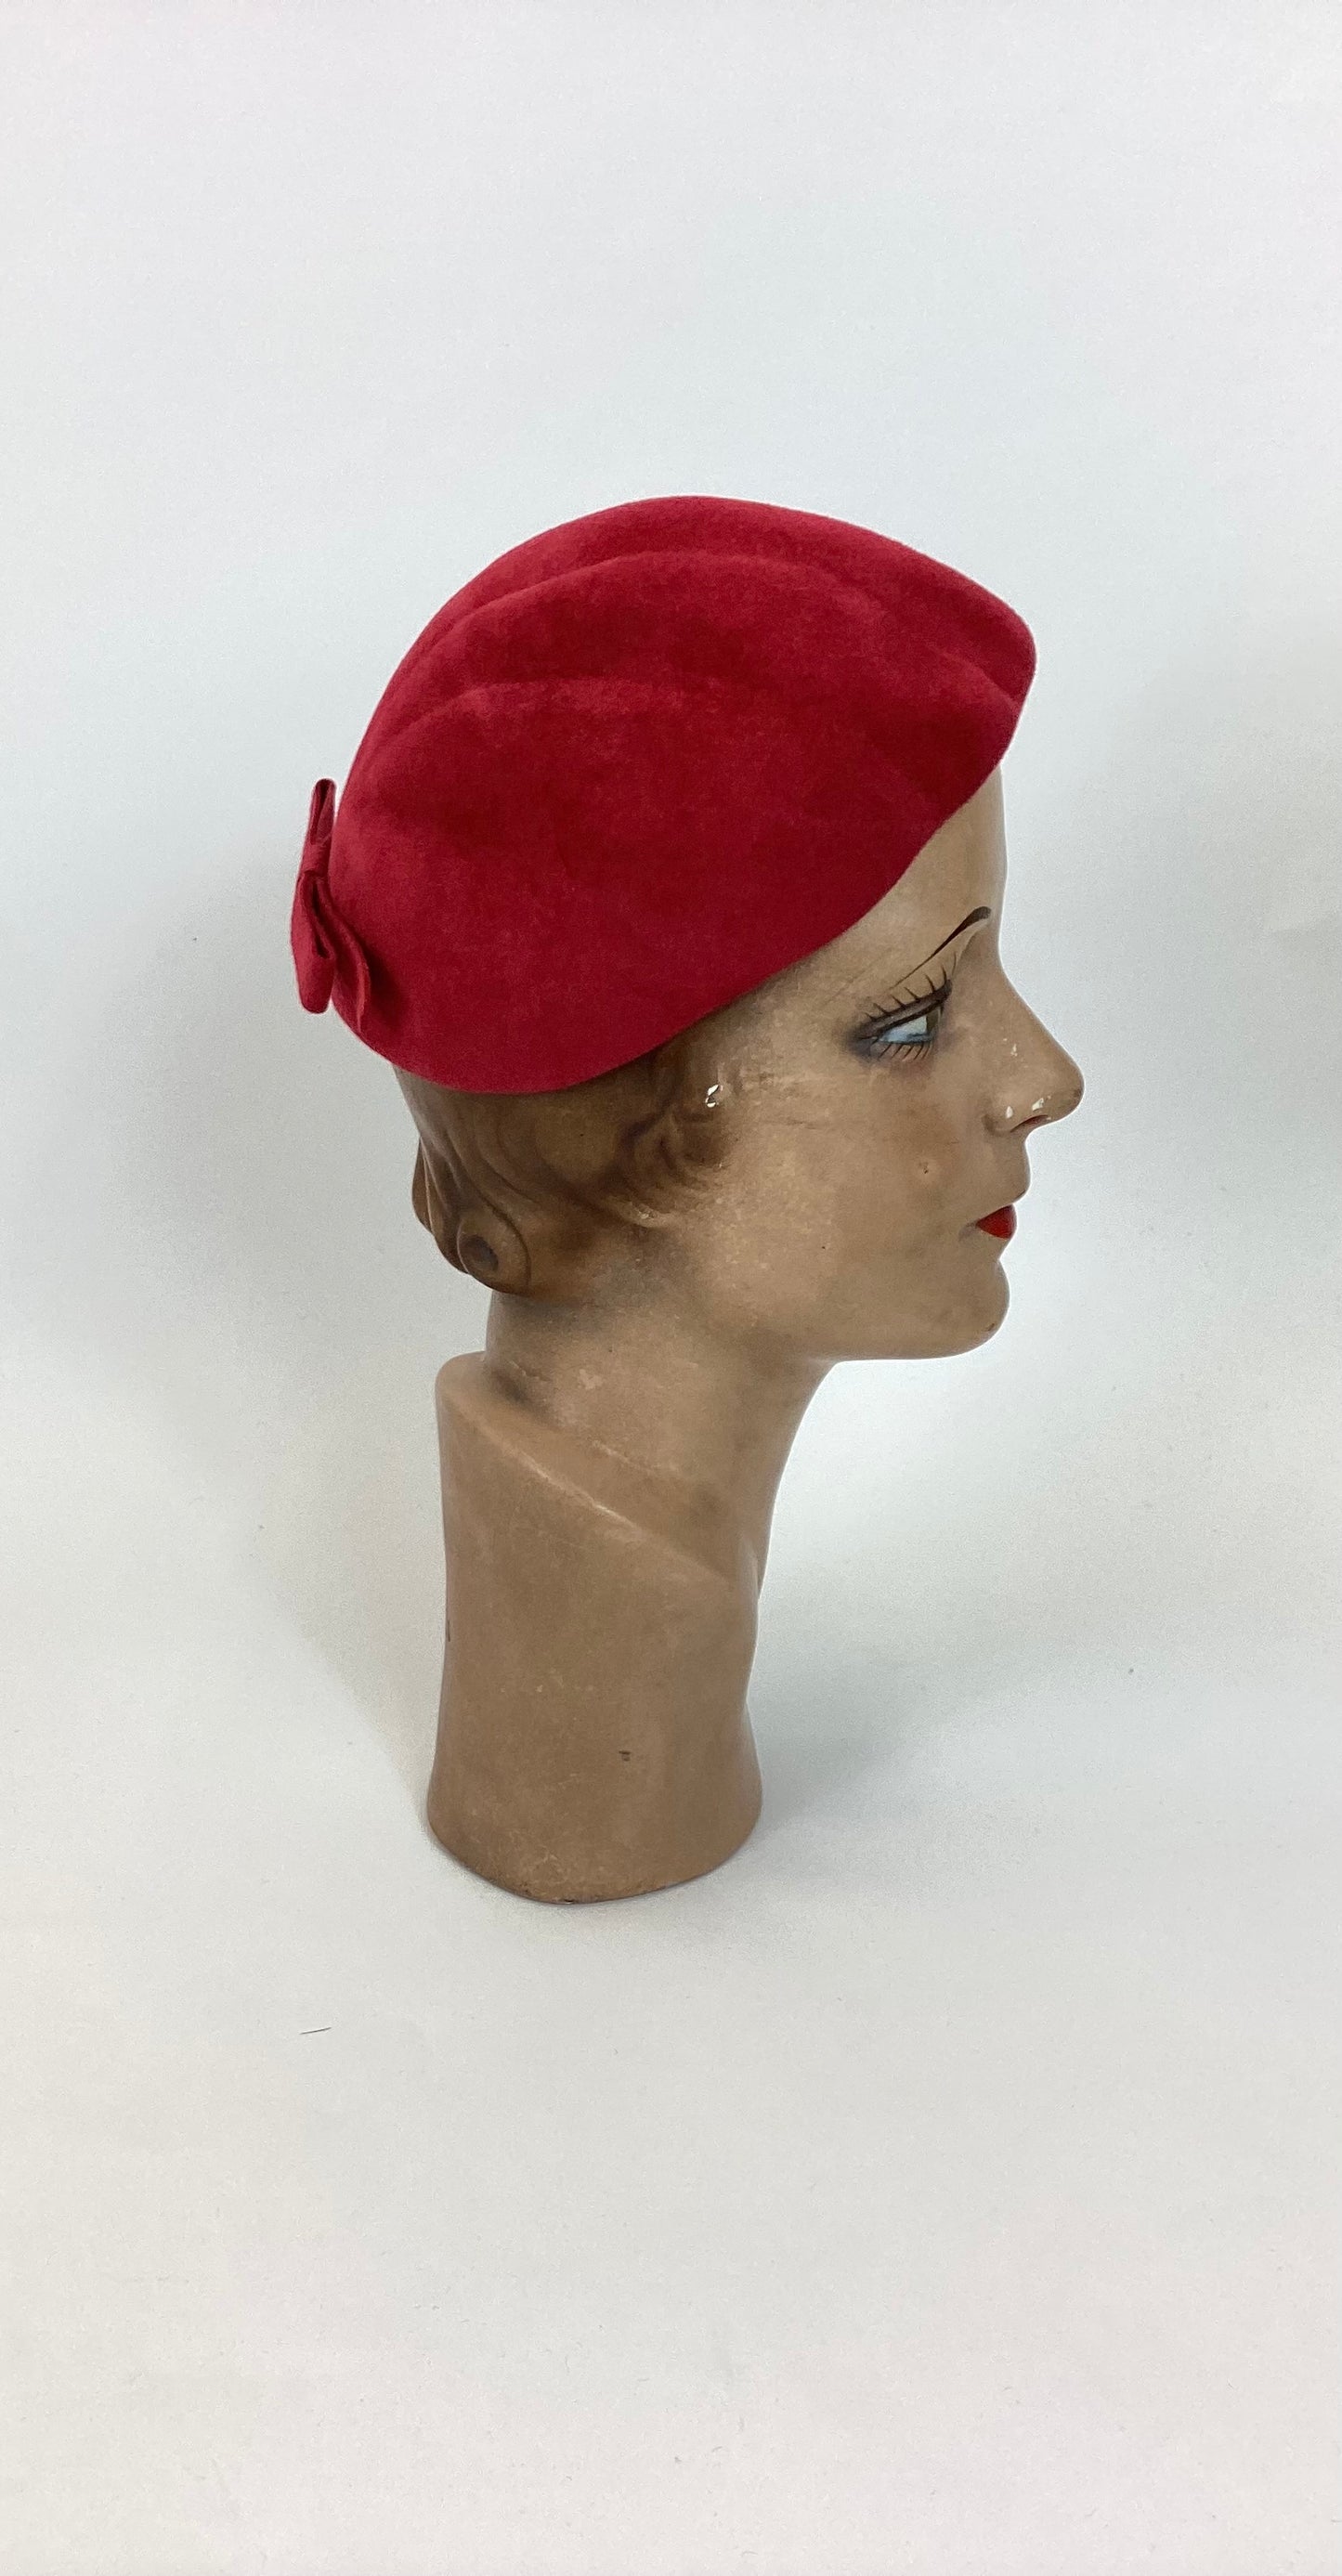 Original 50’s Fabulous shape hat - in Red